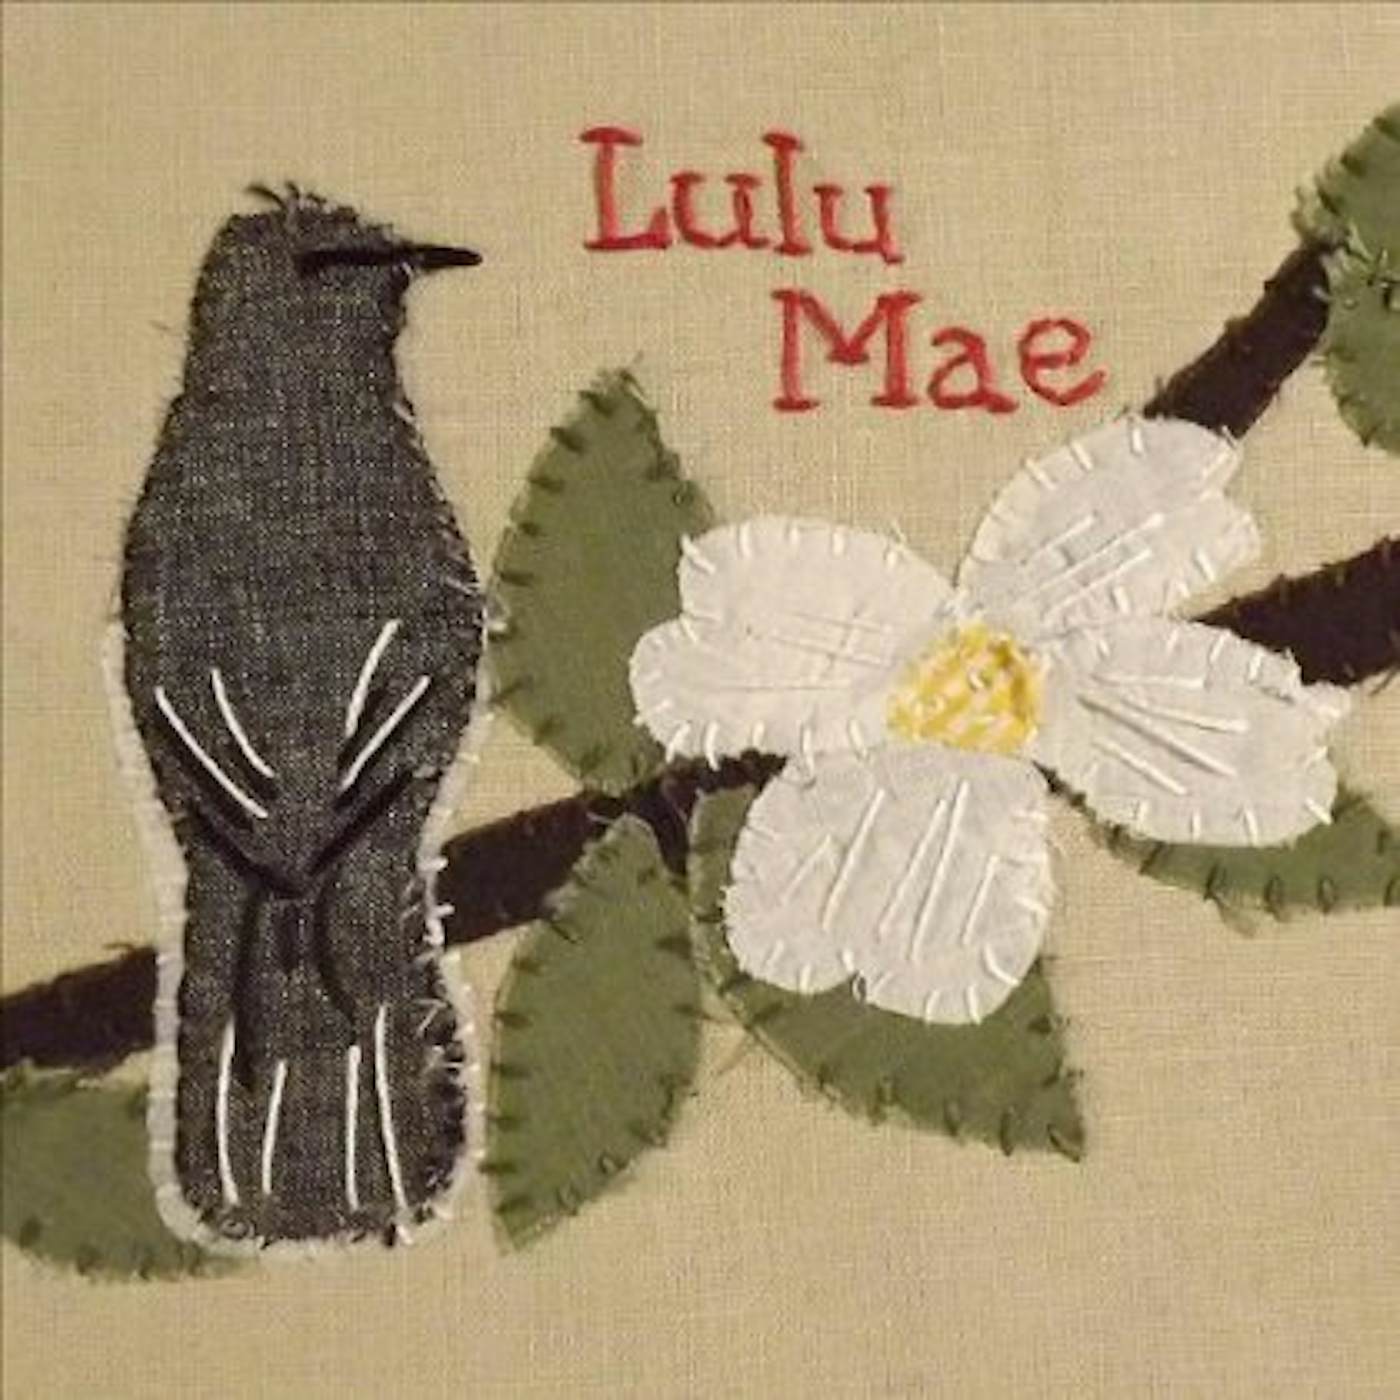 Lulu Mae THE MOCKINGBIRD AND THE DOGWOOD TREE CD